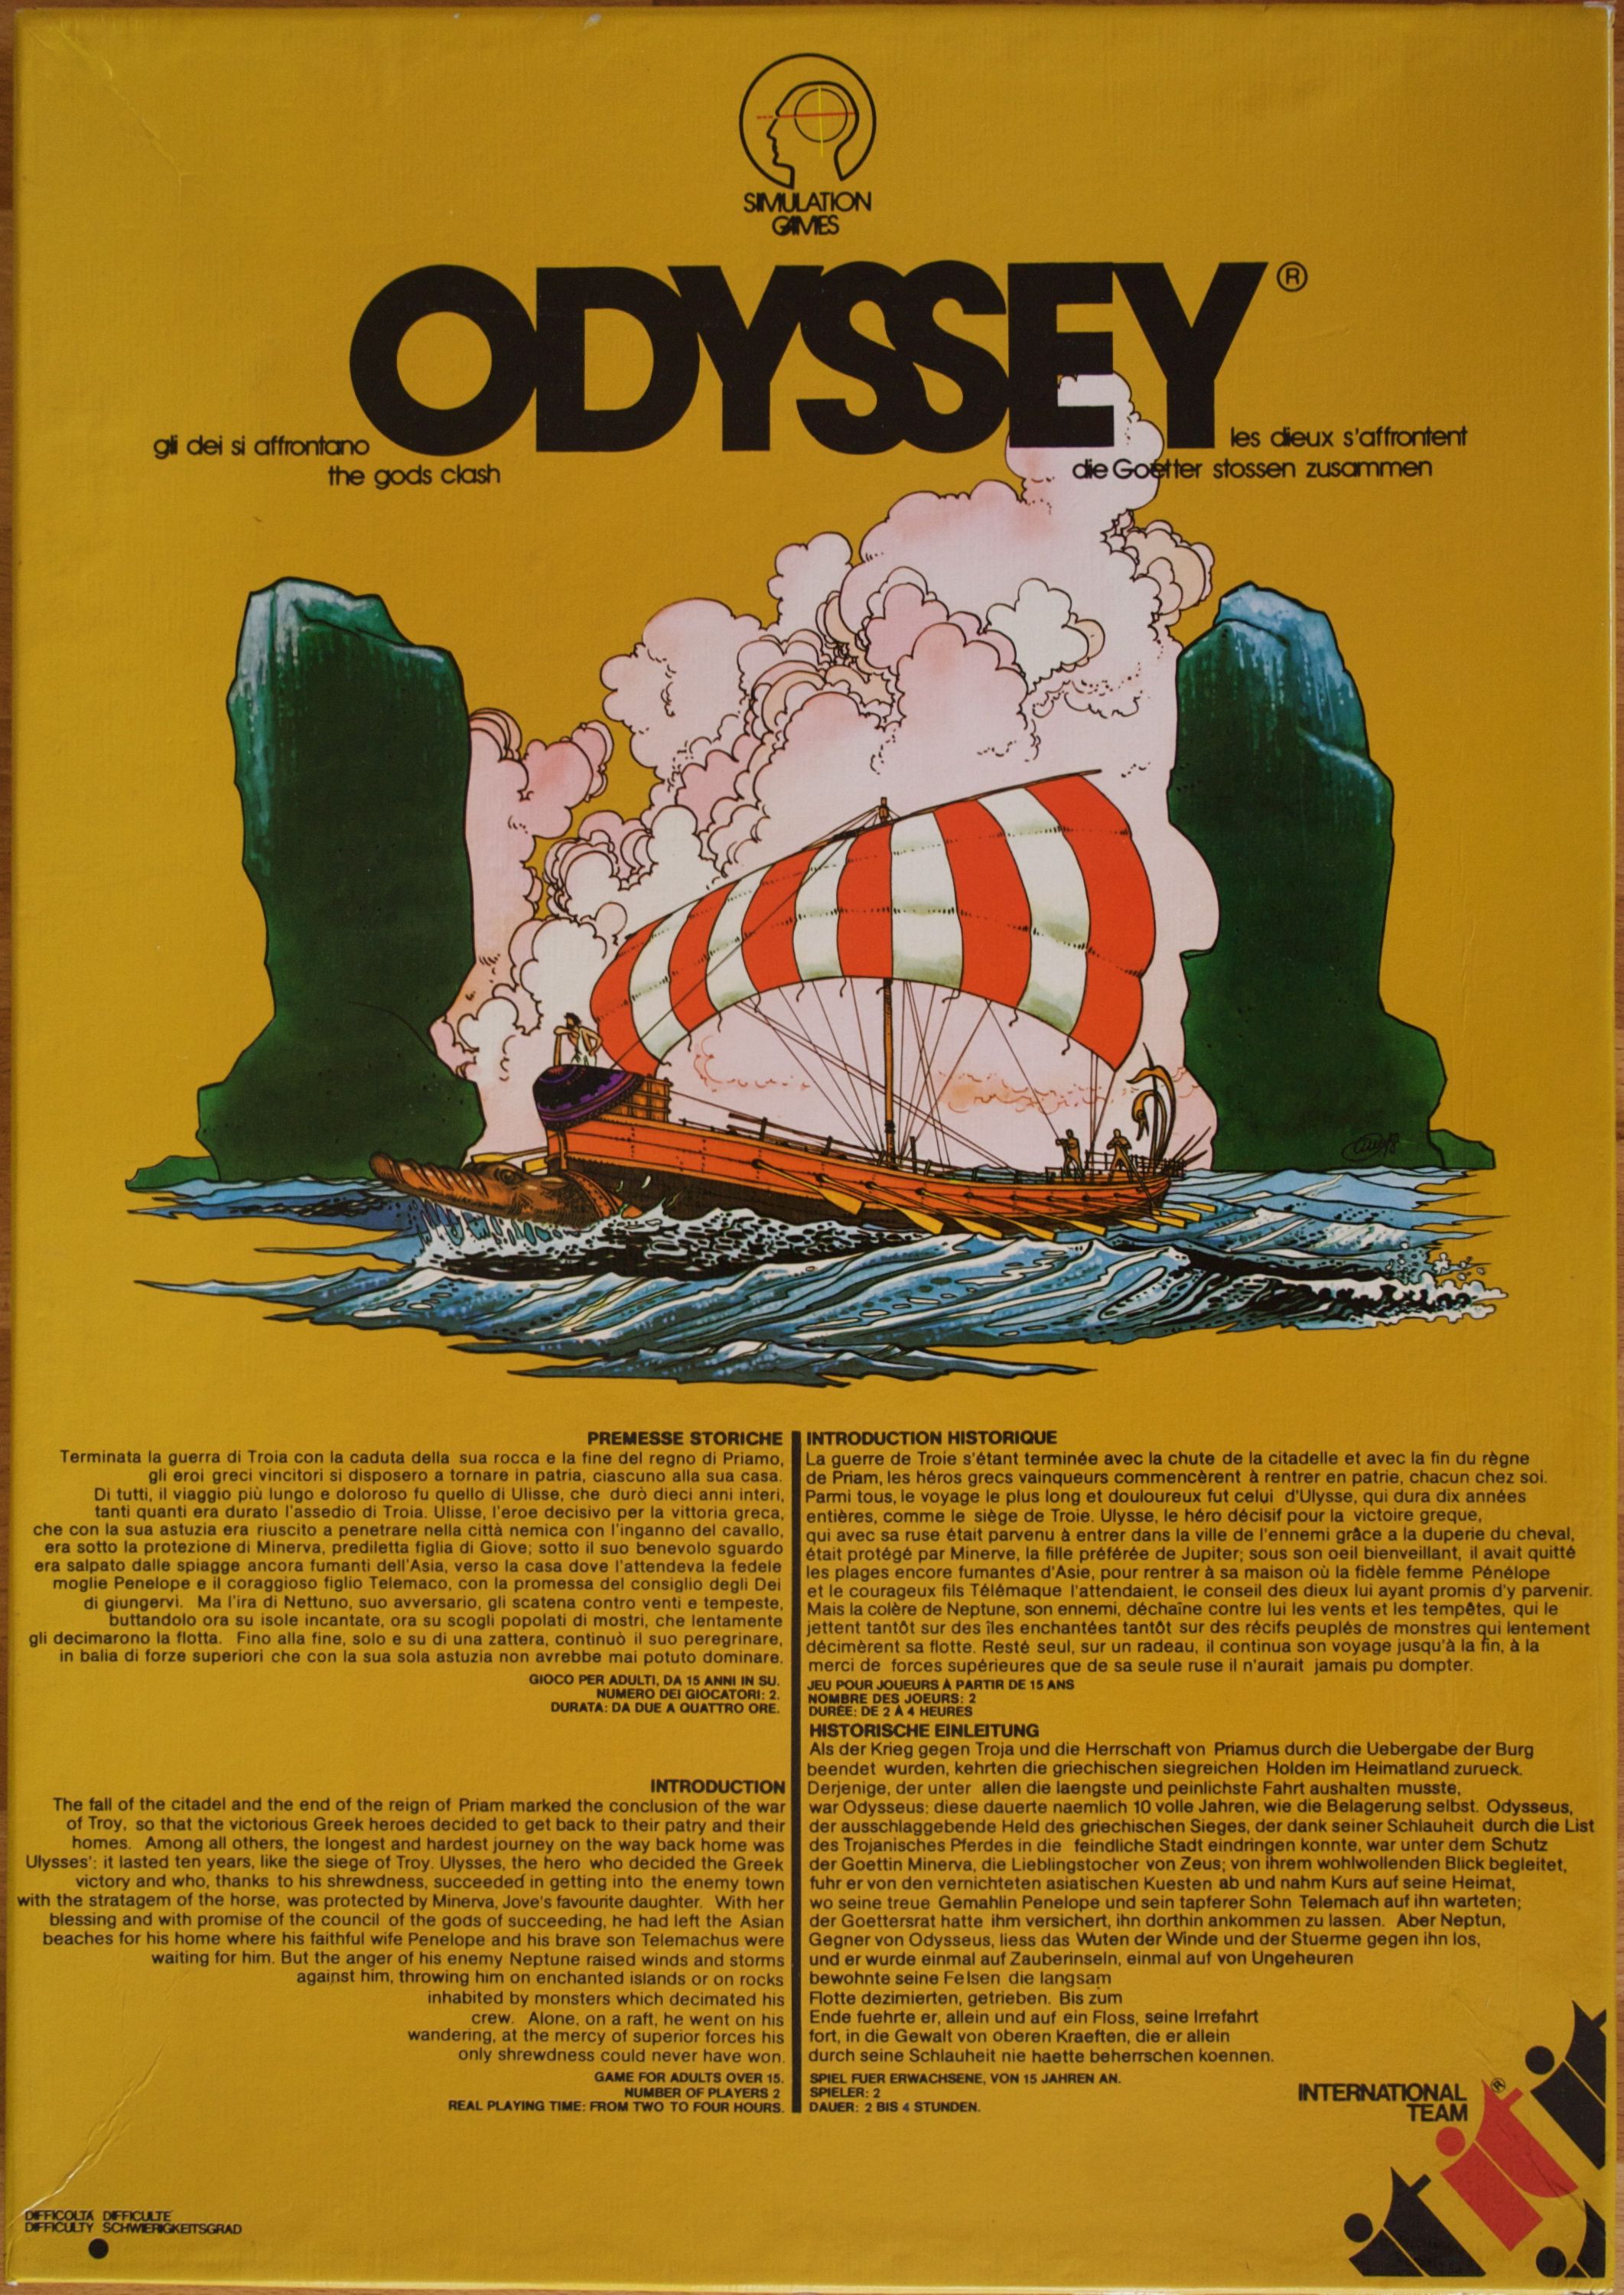 Odyssey: The Gods Clash